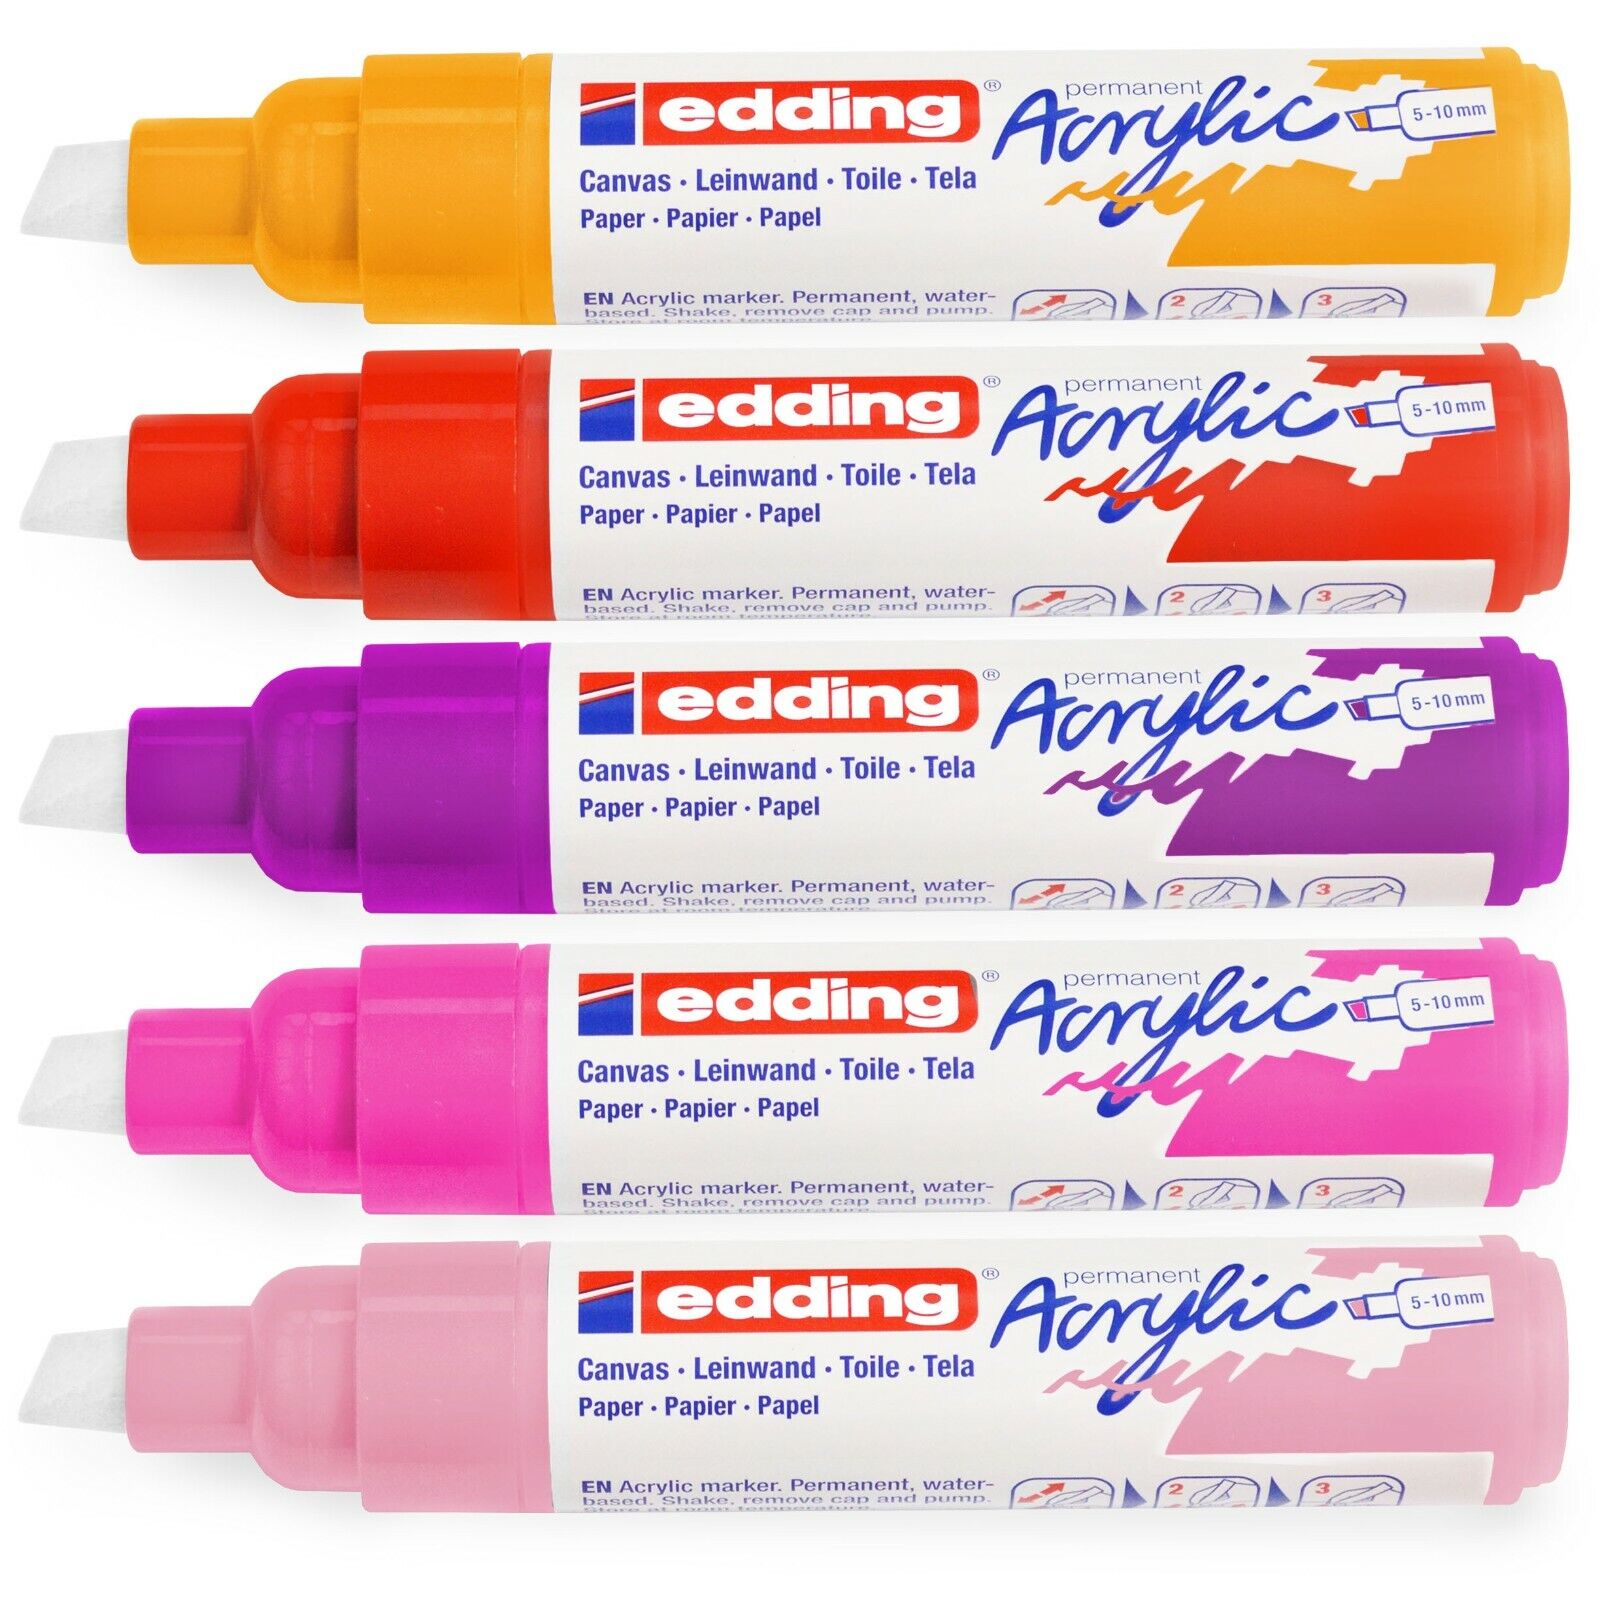 Edding 5000 Permanent Acrylic Paint Marker Pens - Broad 5-10mm - Warm Set of 5